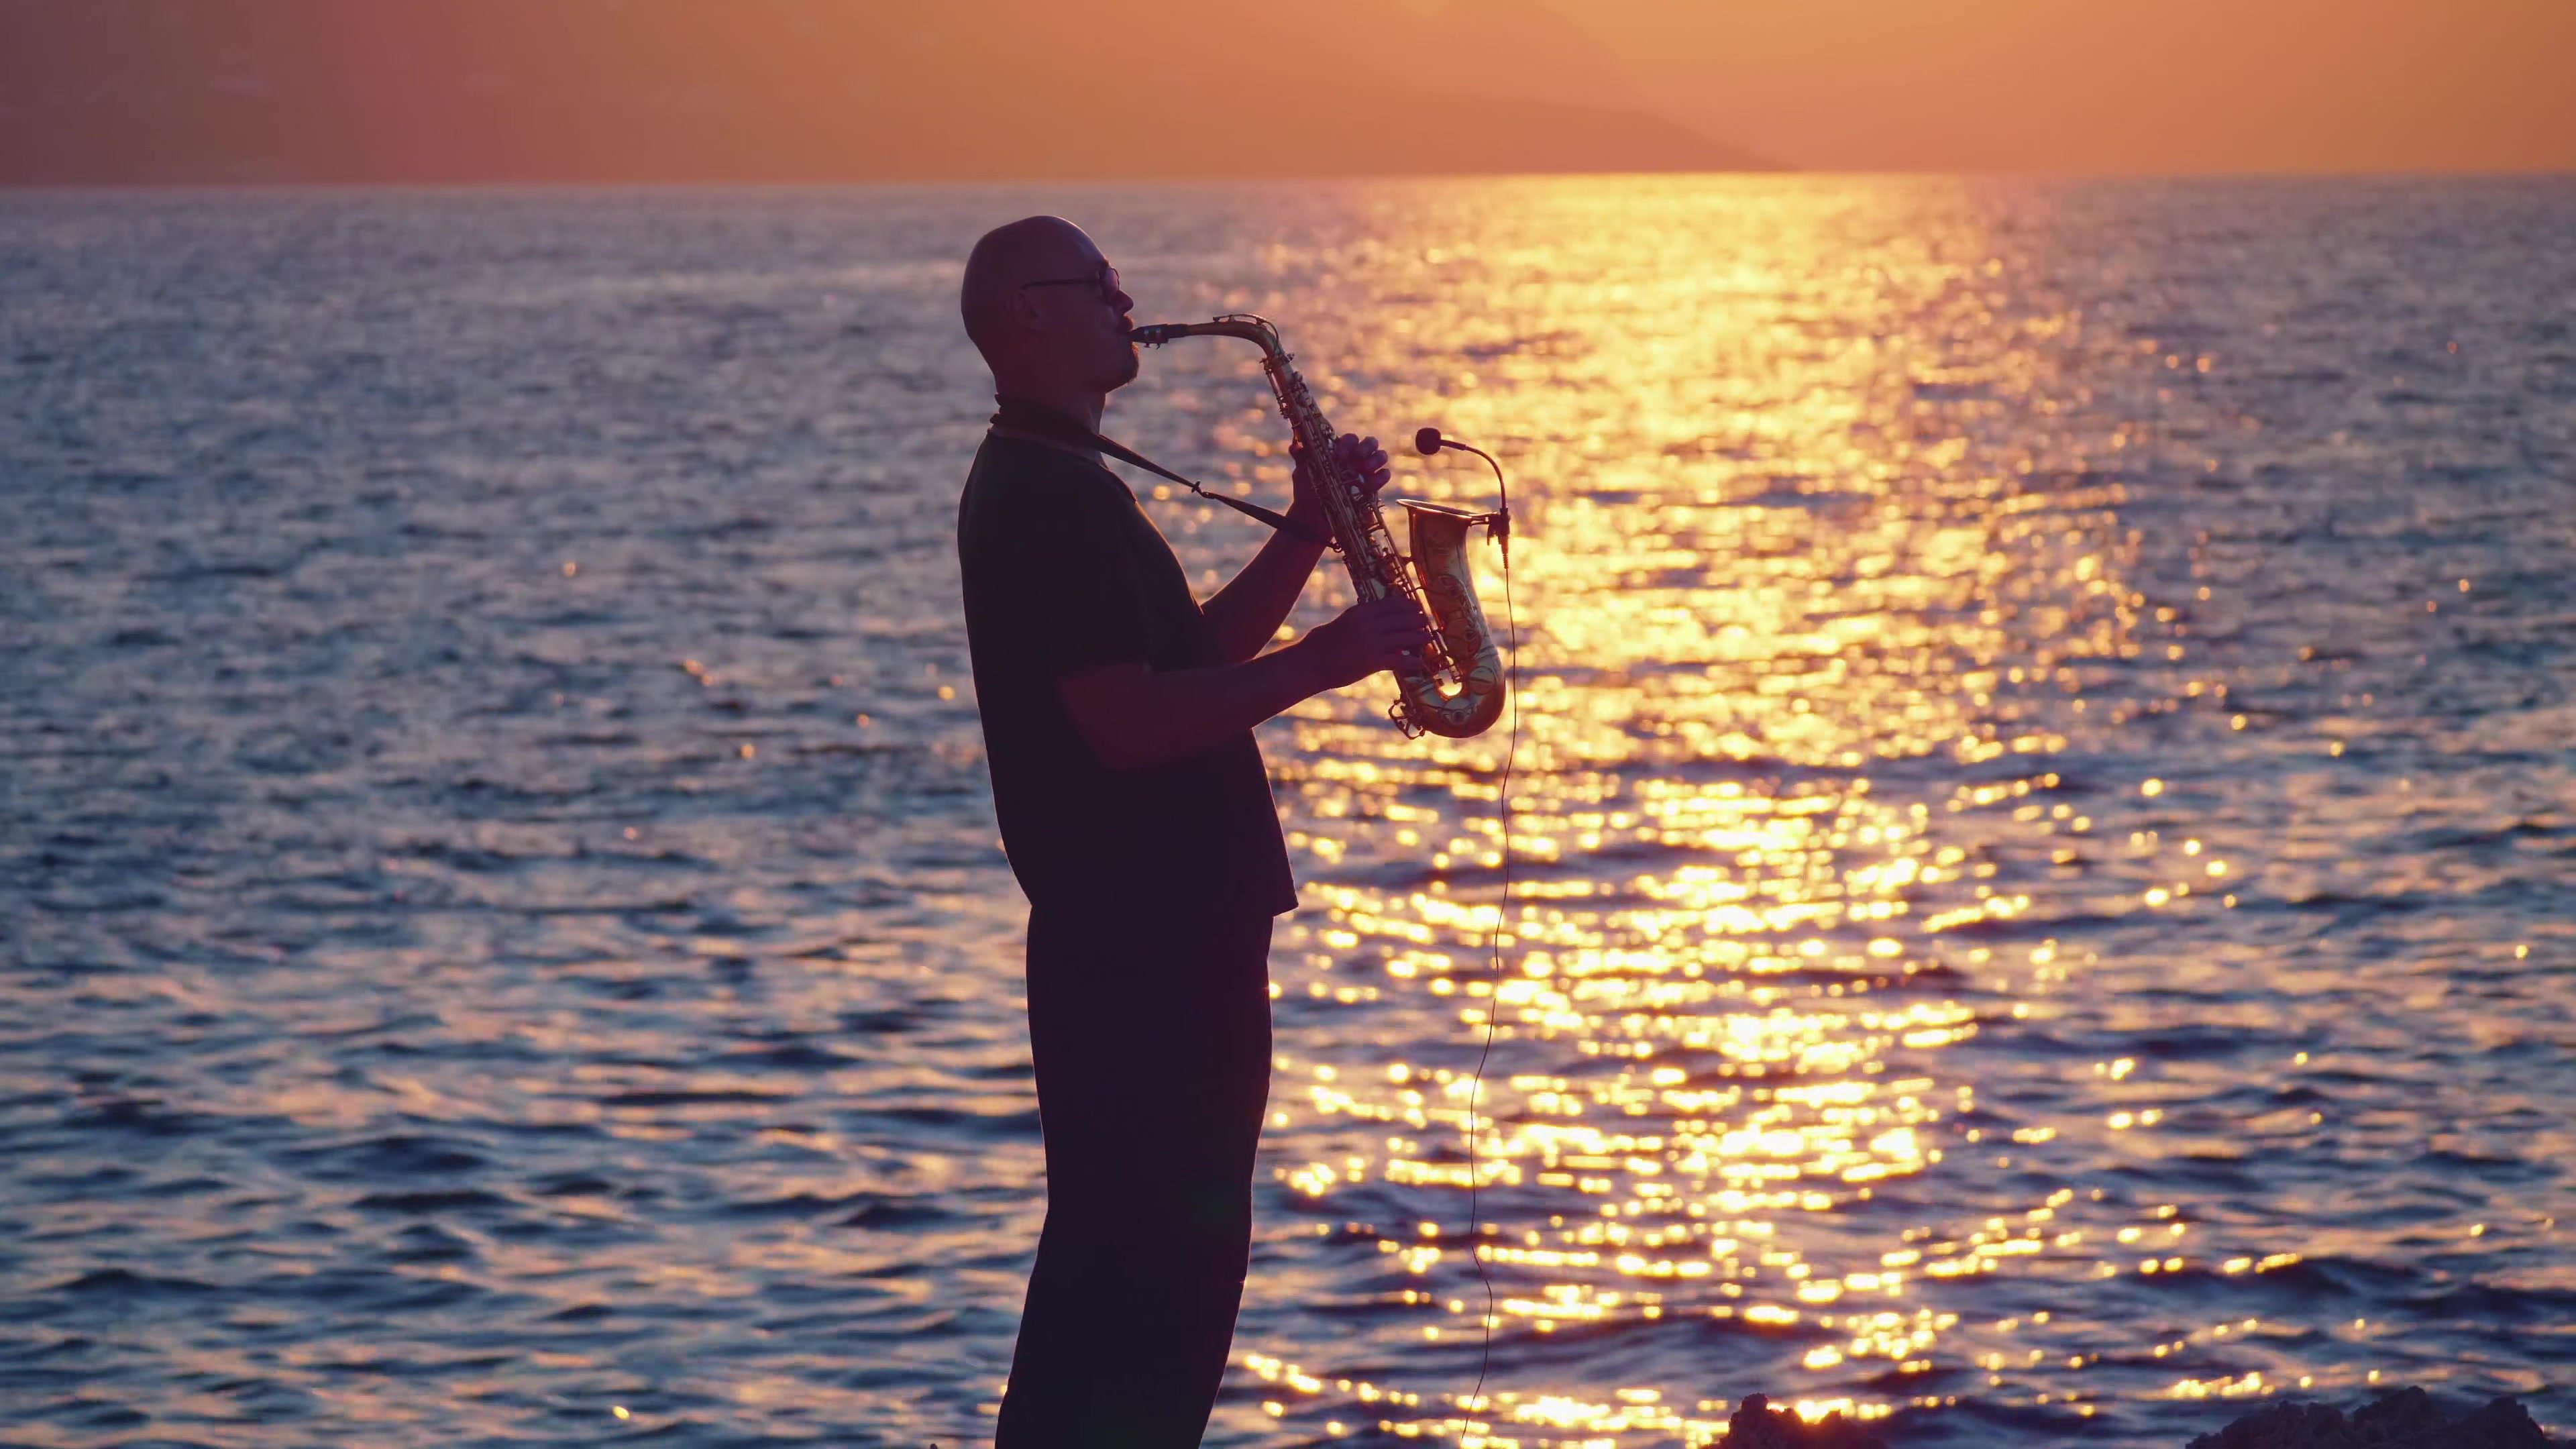 Музыка саксофон без рекламы. Саксофон на яхте. Саксофонист на закате. Саксофонист на берегу моря. Саксофонист на море.